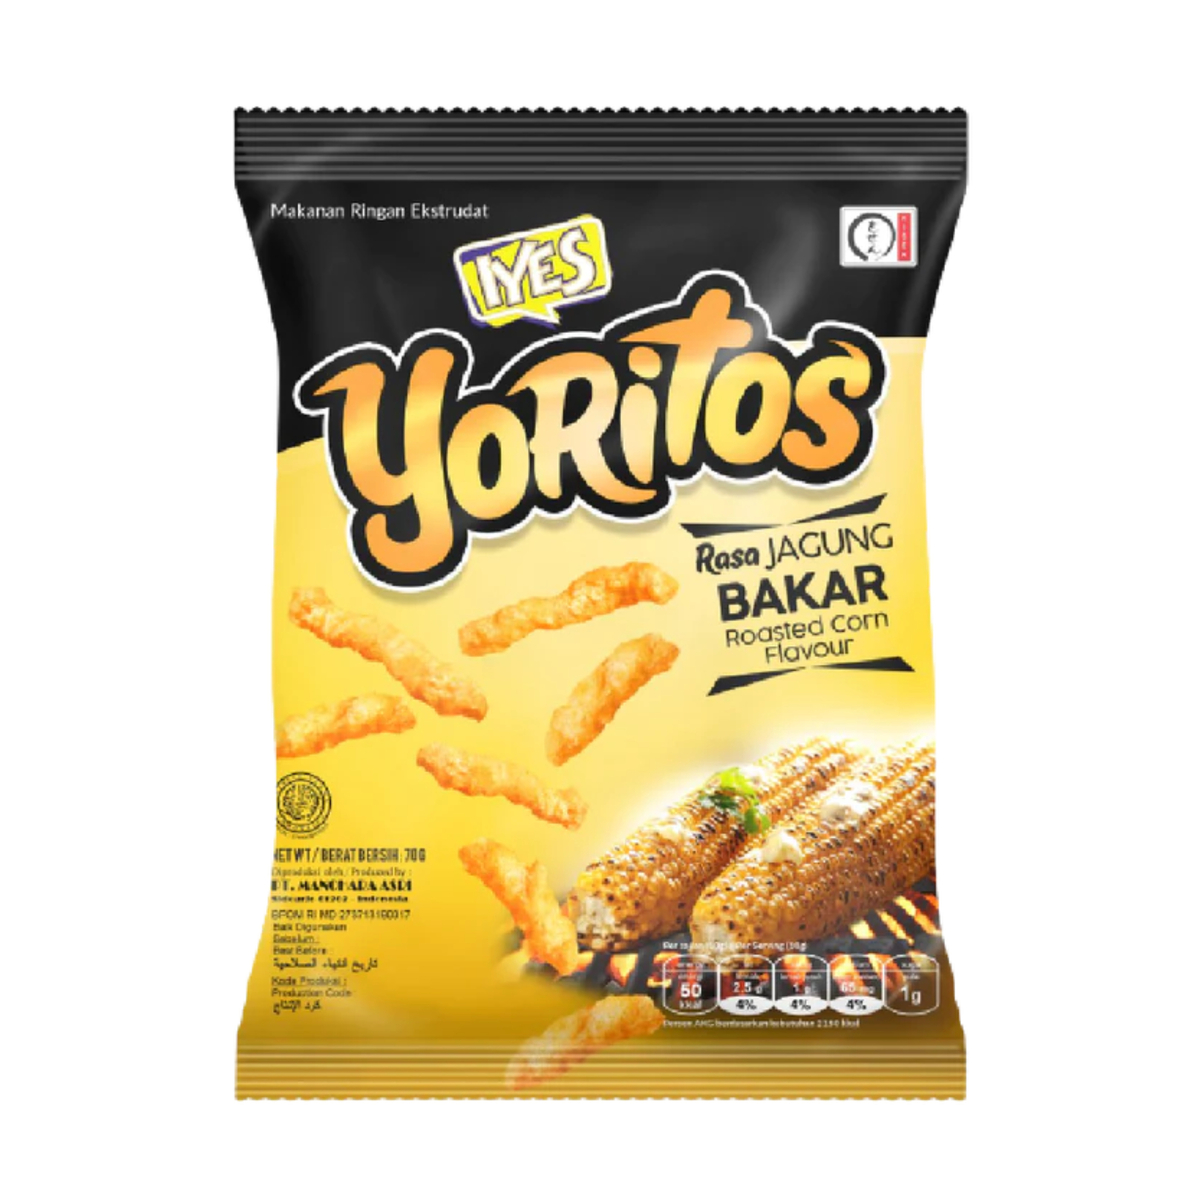 Iyes Yoritos Rosted Corn 70g